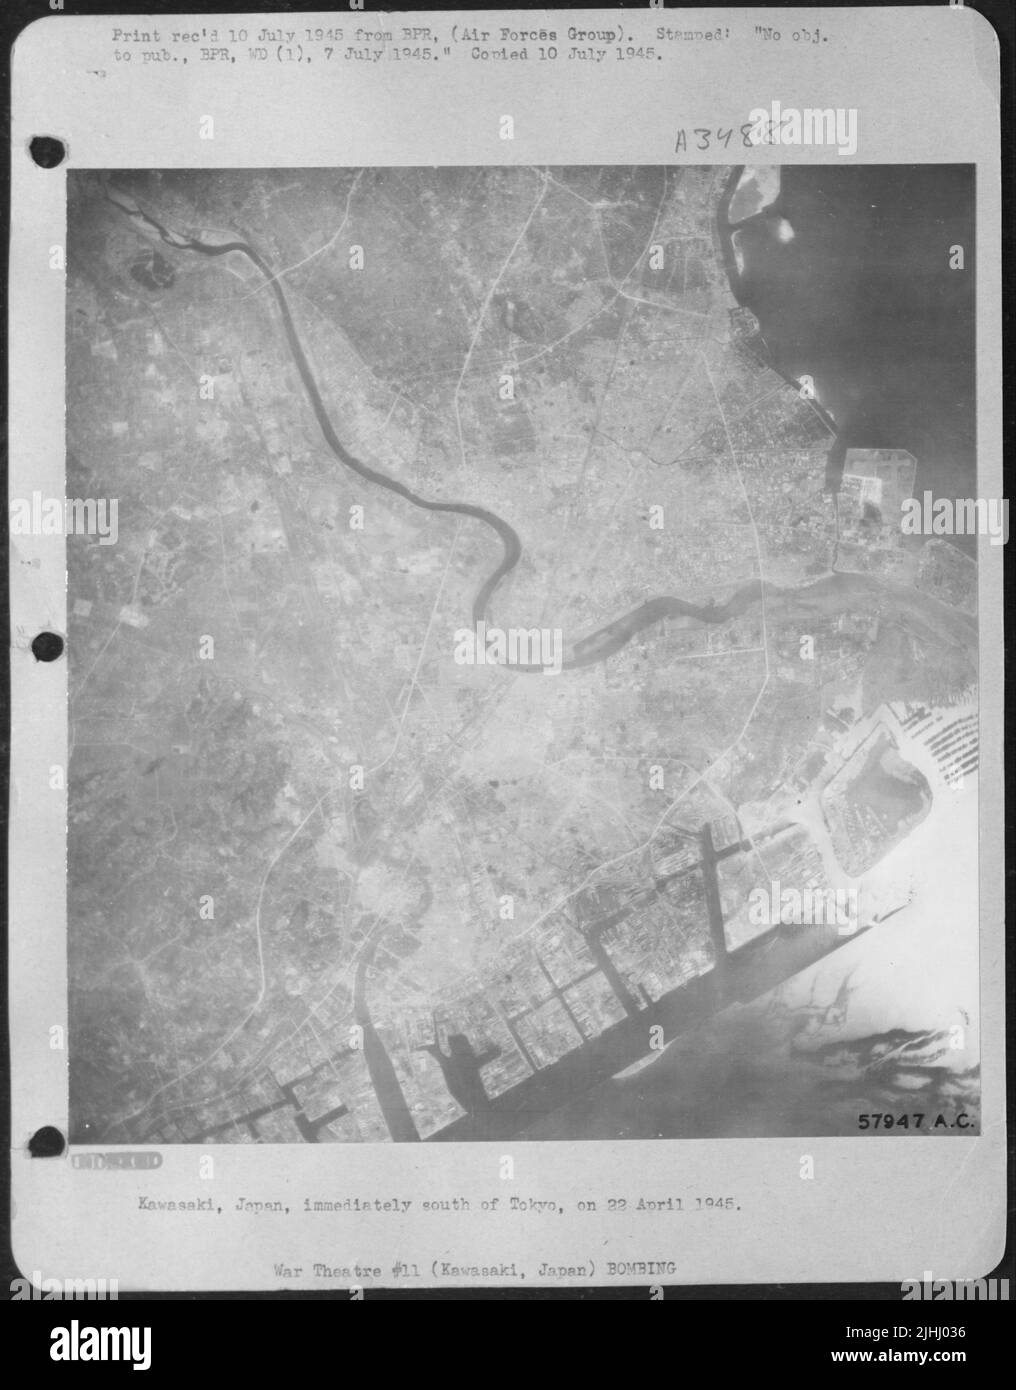 Kawasaki, Japan, Immediately South Of Tokyo, On 22 April 1945. Stock Photo